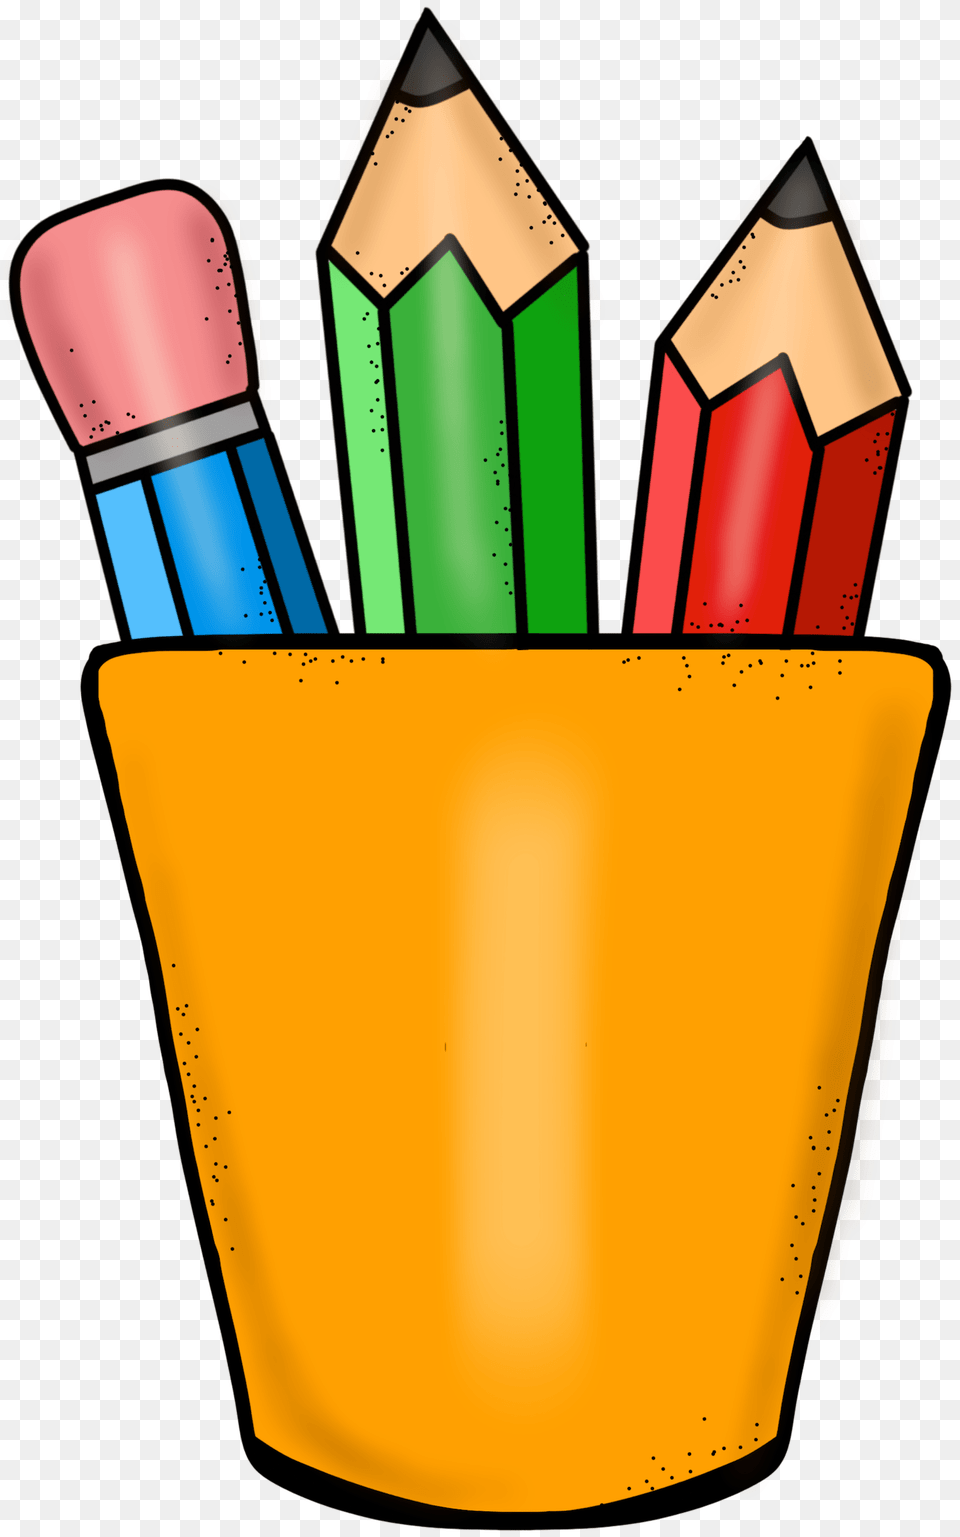 Pencil Clip Art For Teachers Pencil Clipart For Teachers, First Aid Free Transparent Png